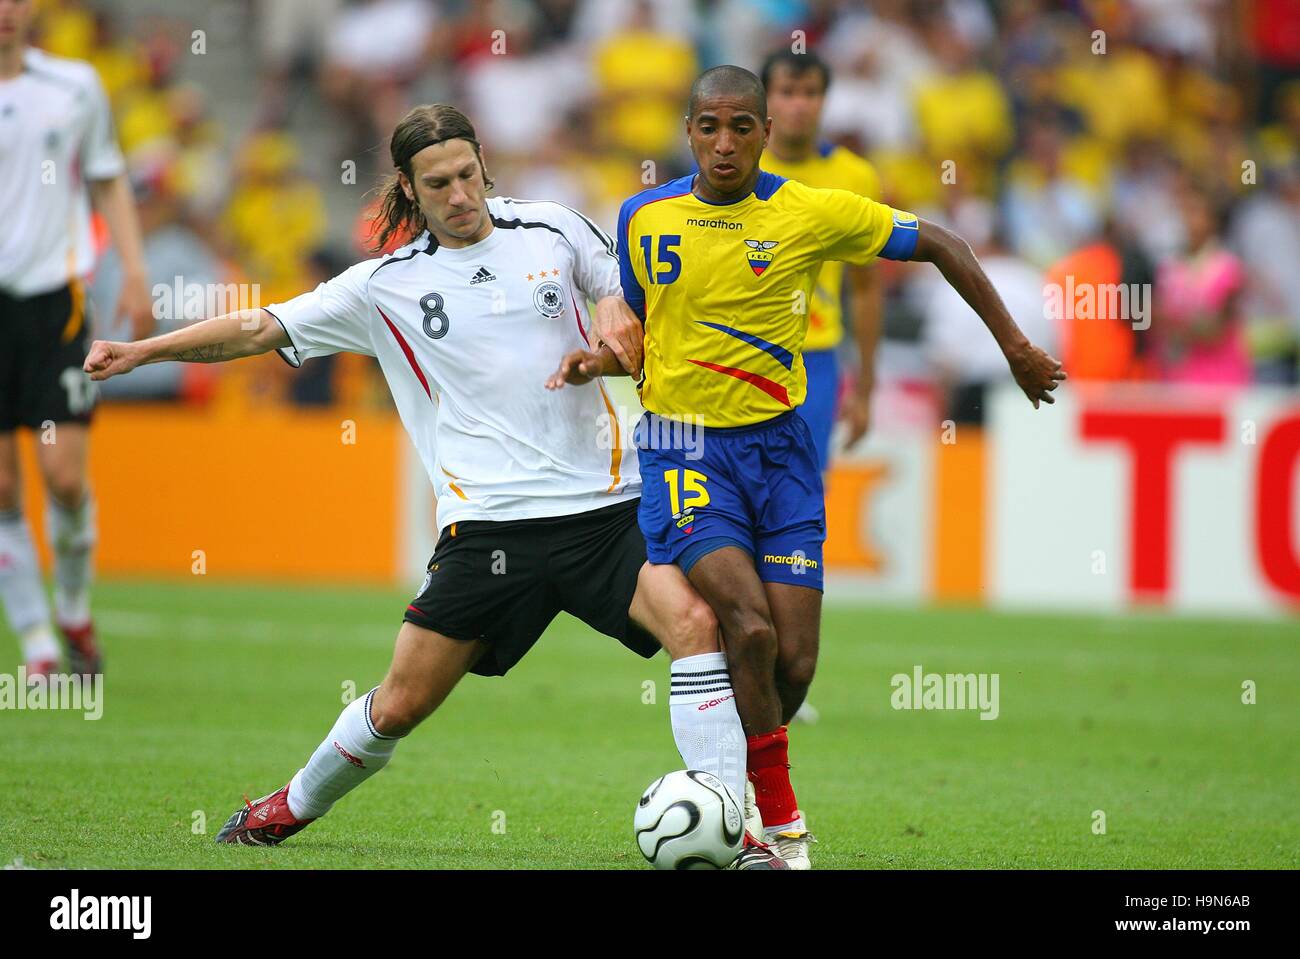 TORSTEN FRINGS & MARLON AYOVI ECUADOR V GERMANY WORLD CUP BERLIN GERMANY 20 June 2006 Stock Photo